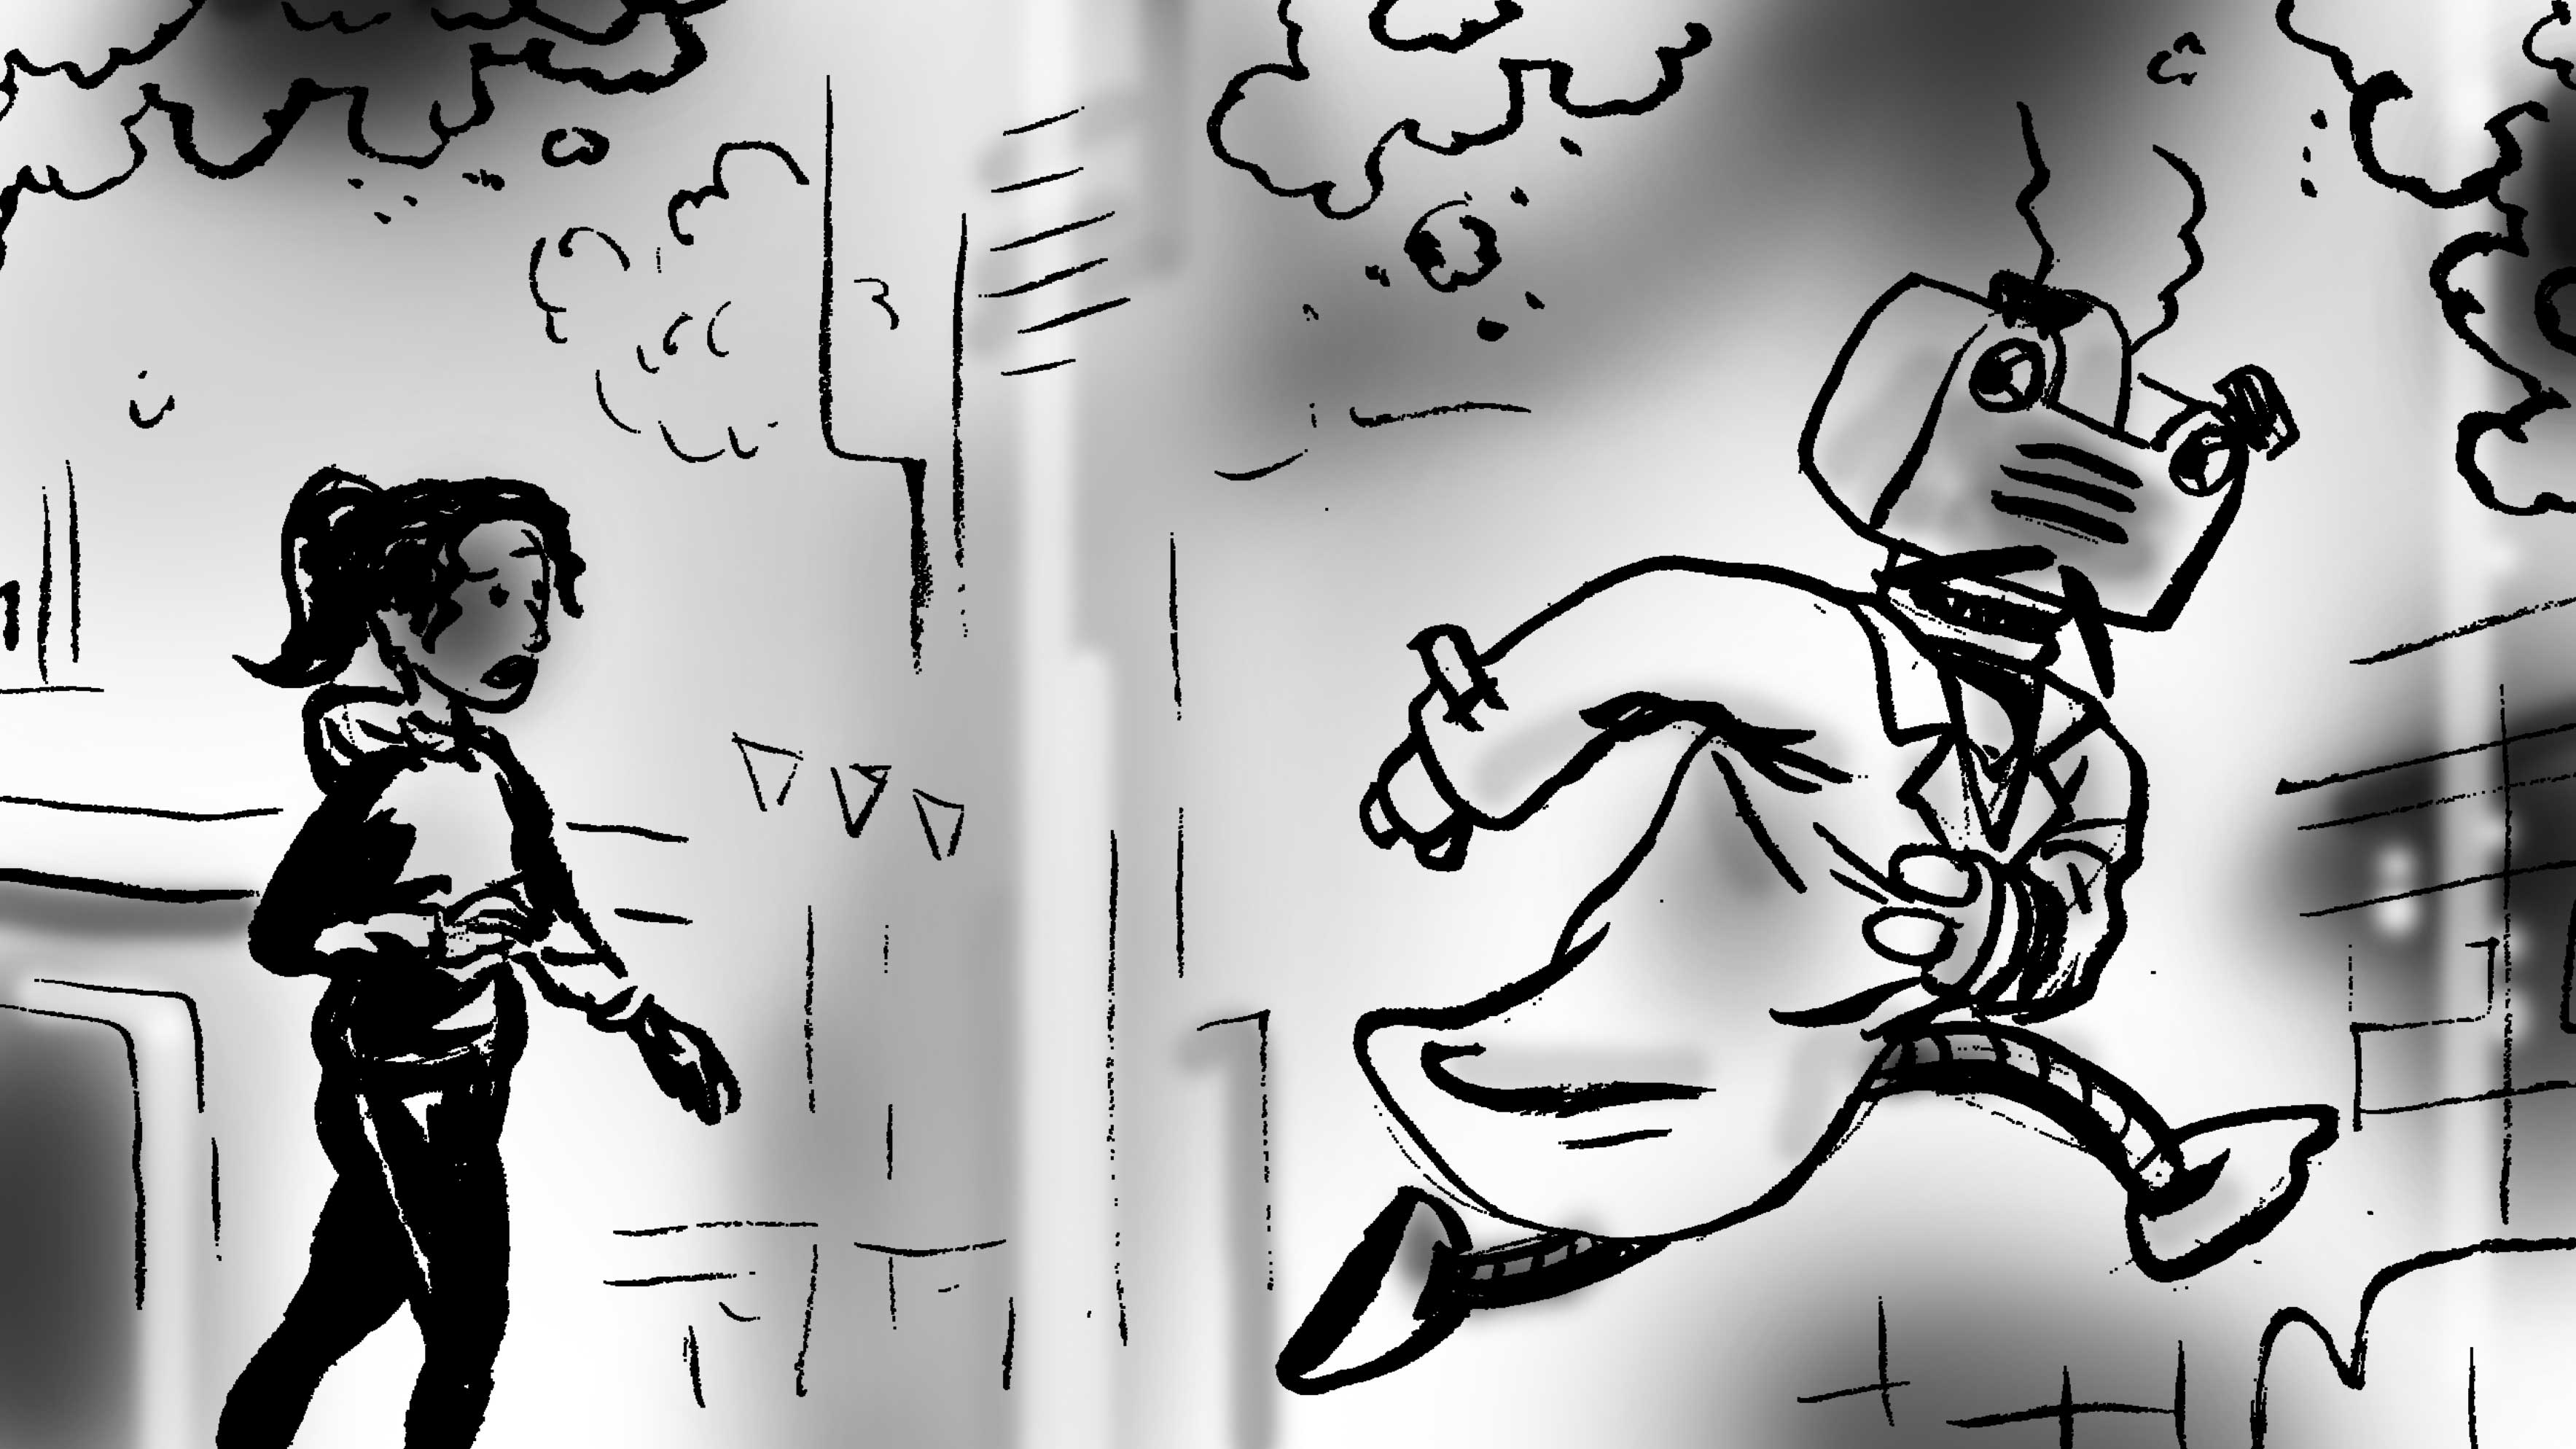 video game storyboard 10 - Jasey Crowl Draws